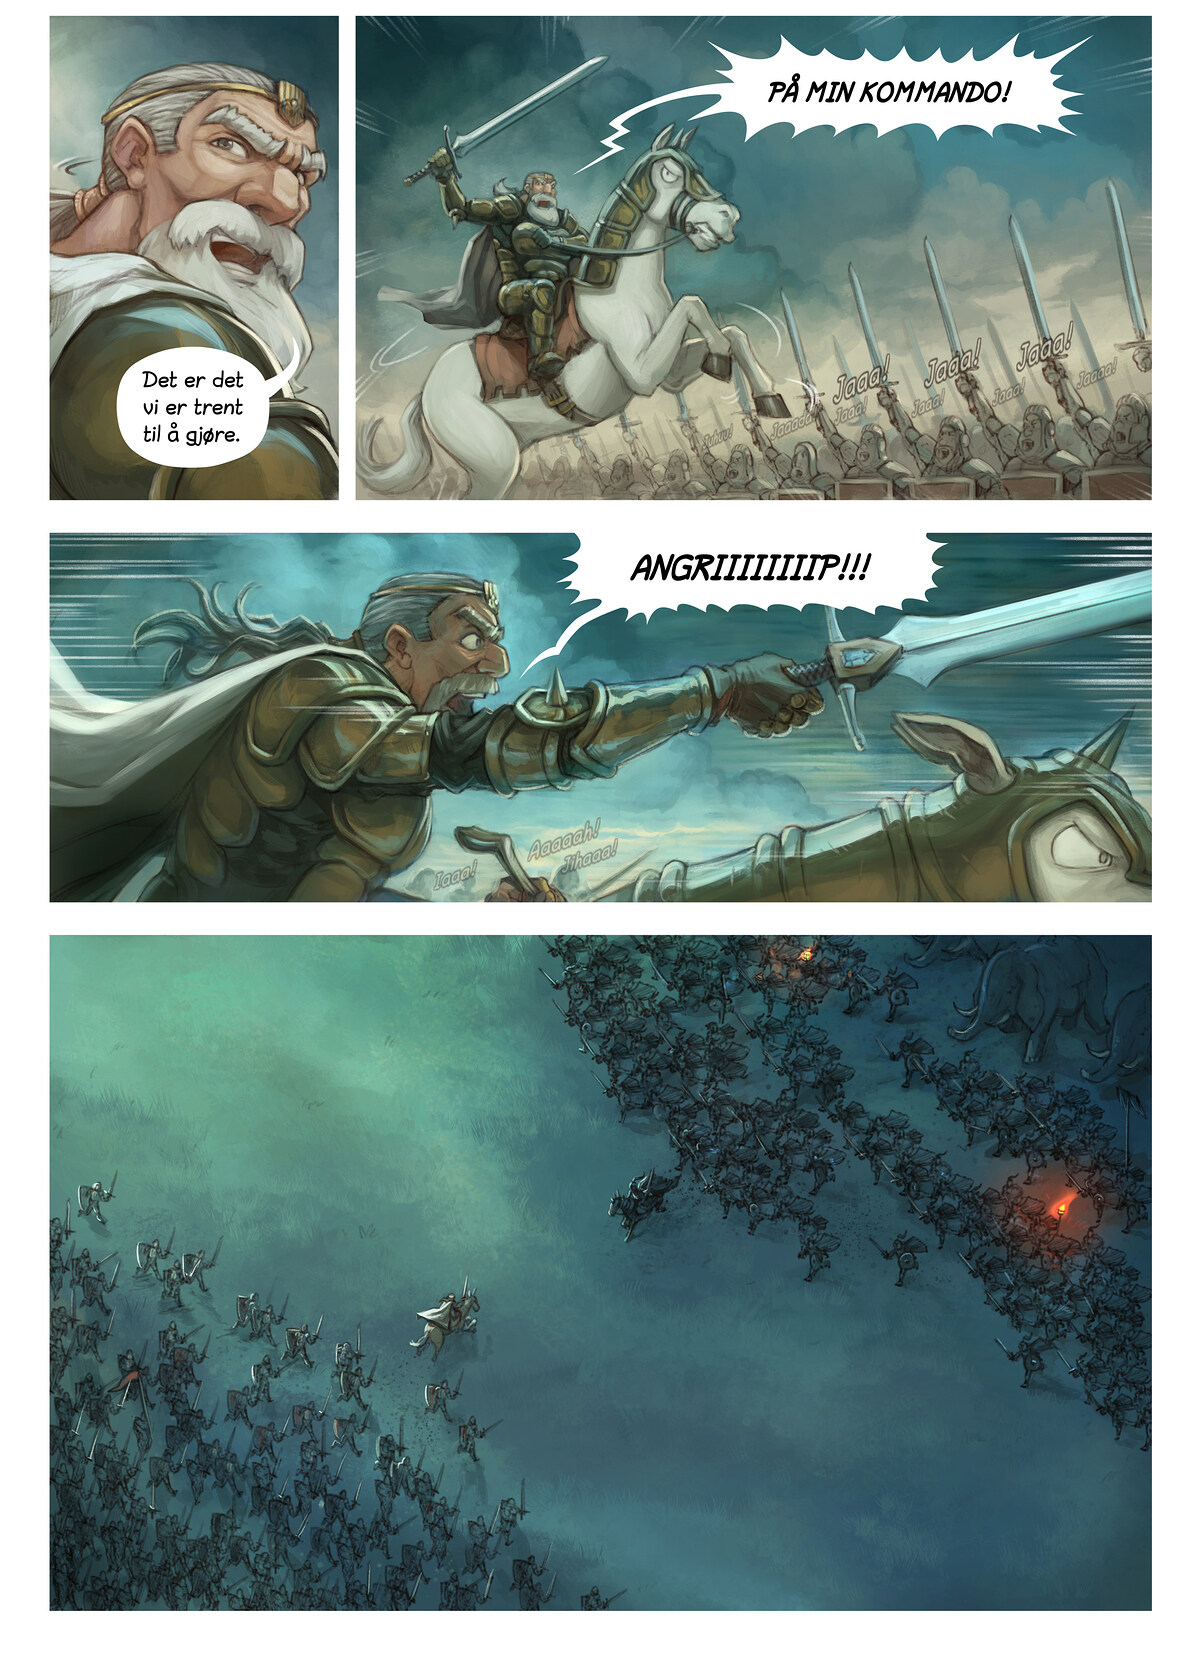 Episode 33: Krigsformelen, Page 4